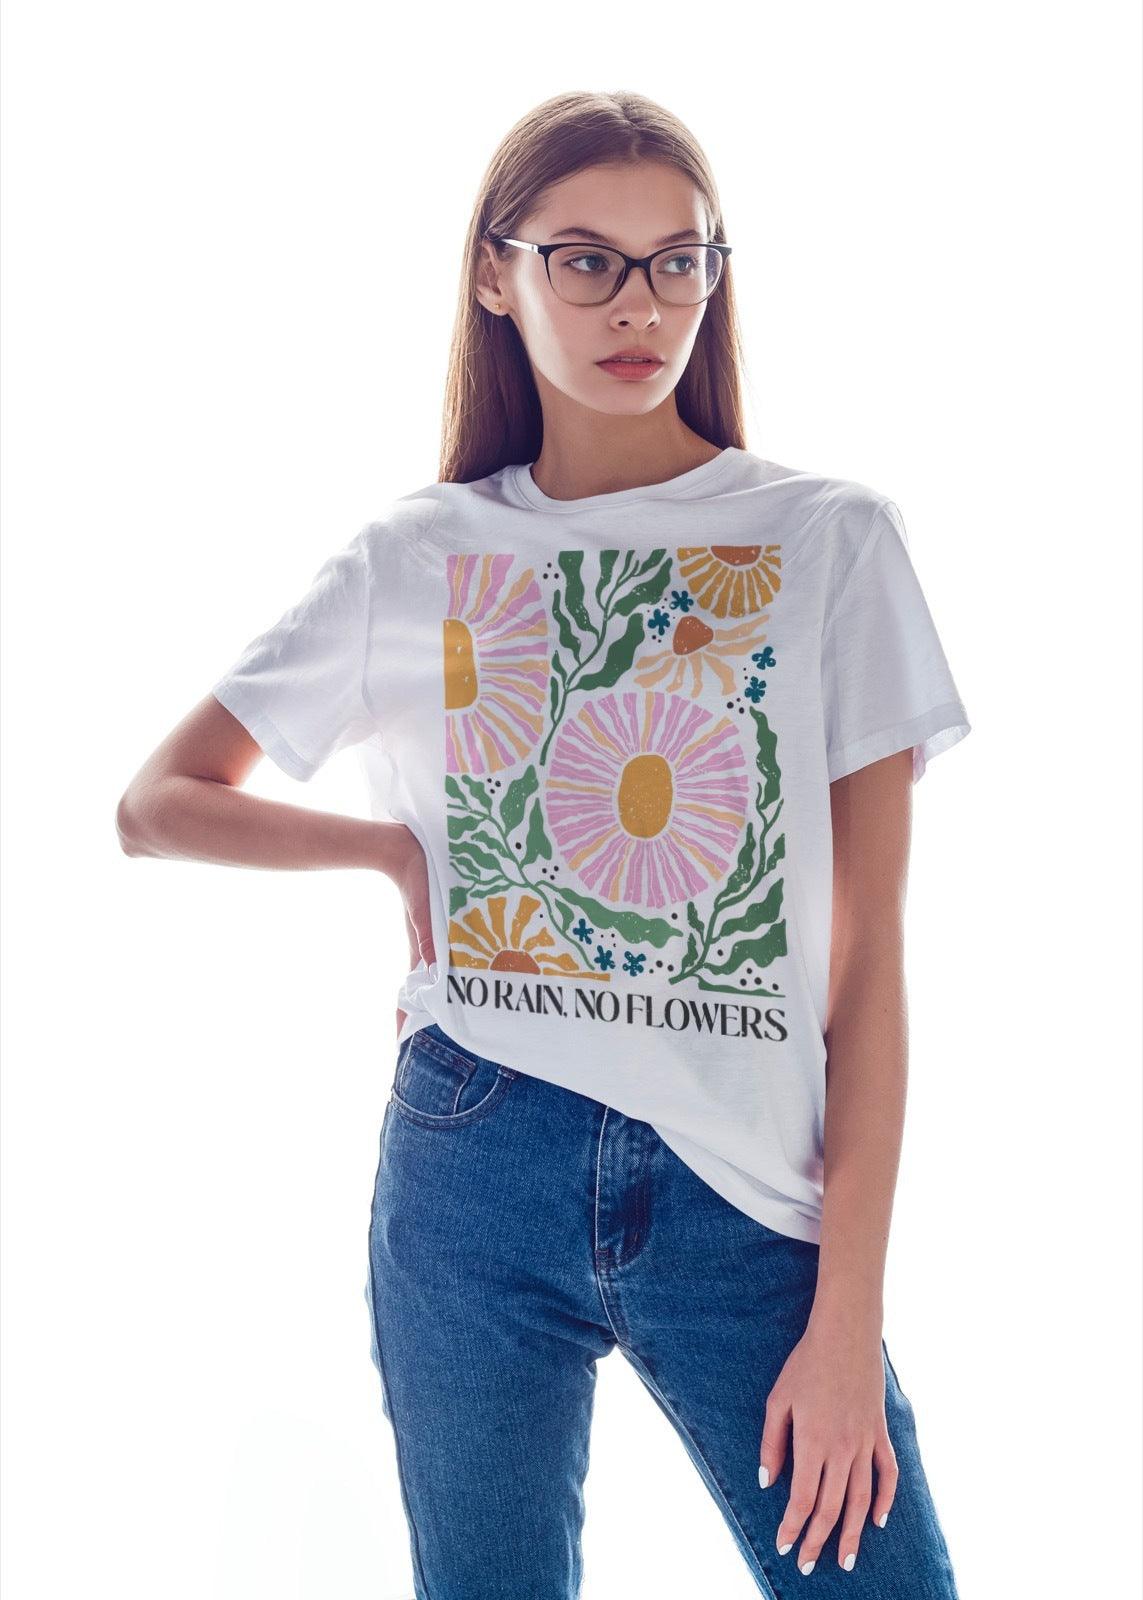 Women’s Boyfriend T-shirt-No Rain No Flowers - Premium  from Elementologie - Just $24.99! Shop now at Elementologie